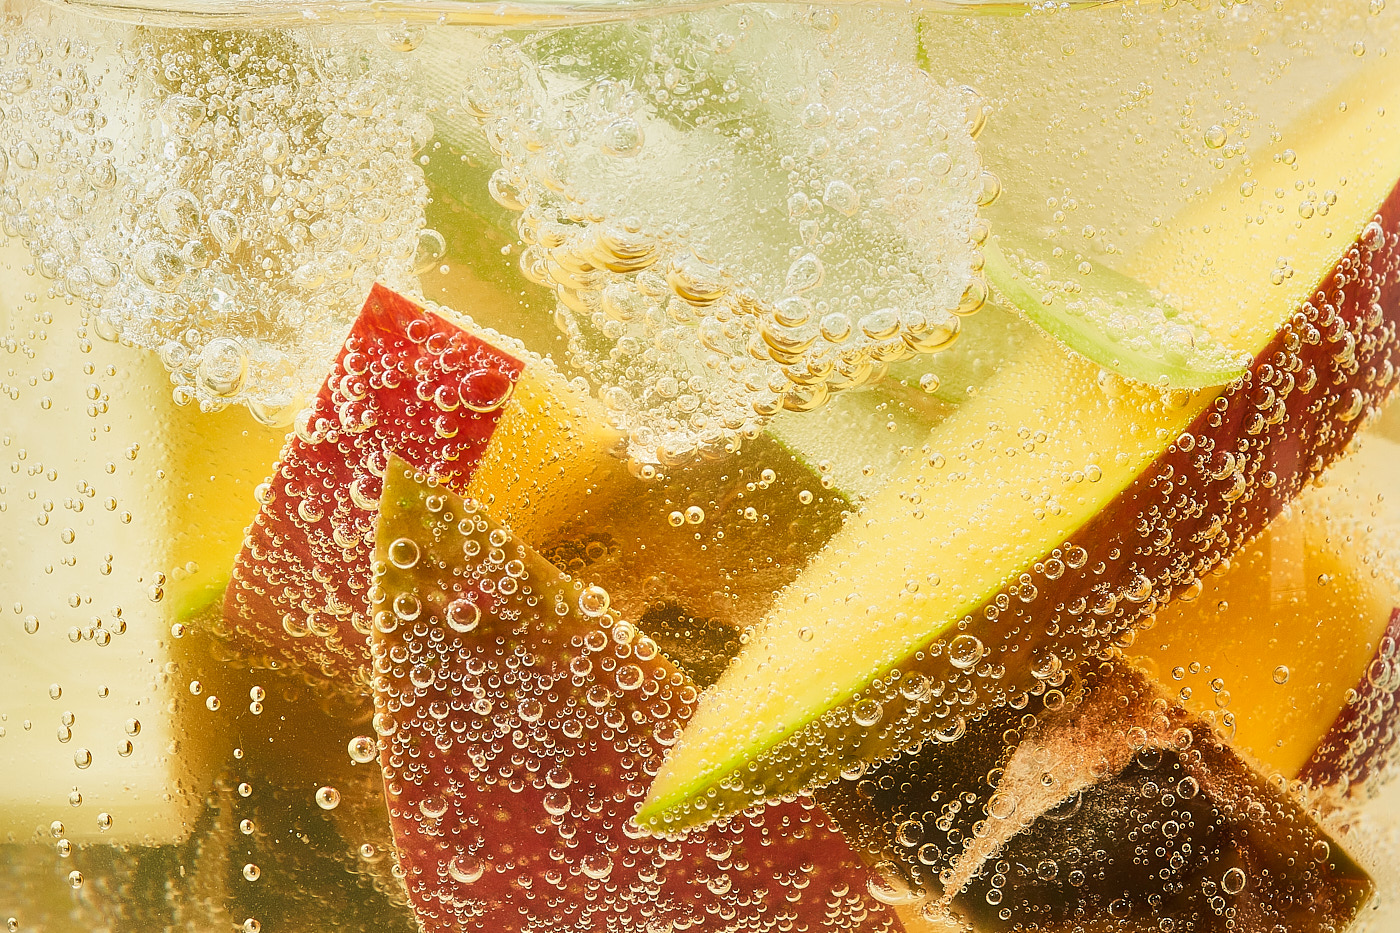 Drinks Photography - Macro of fruit in liquid